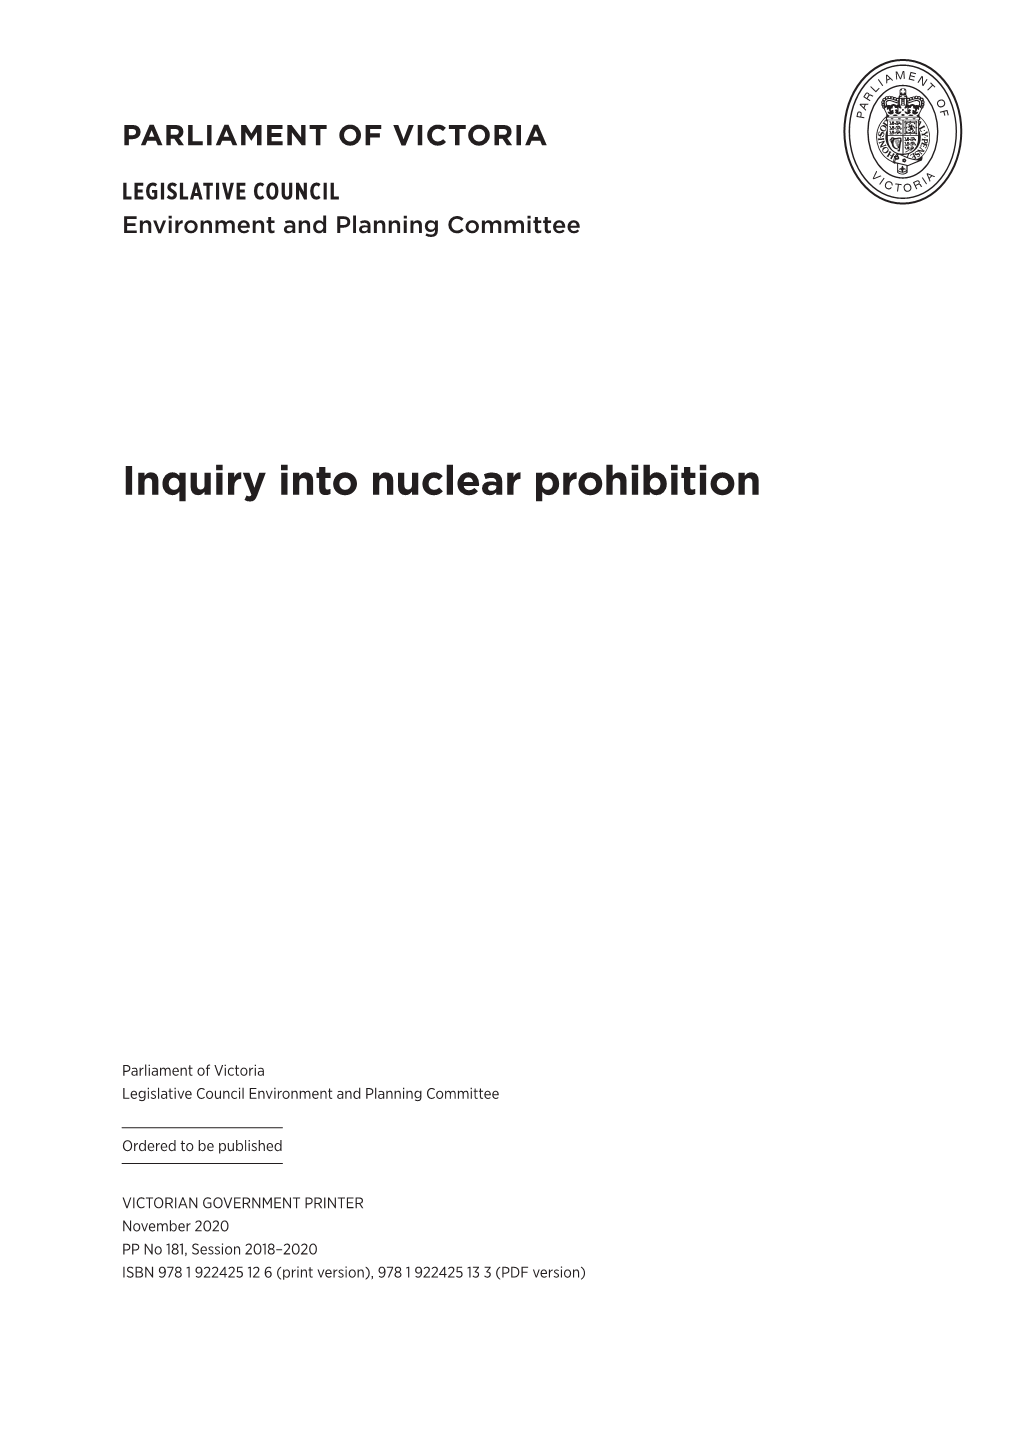 Inquiry Into Nuclear Prohibition